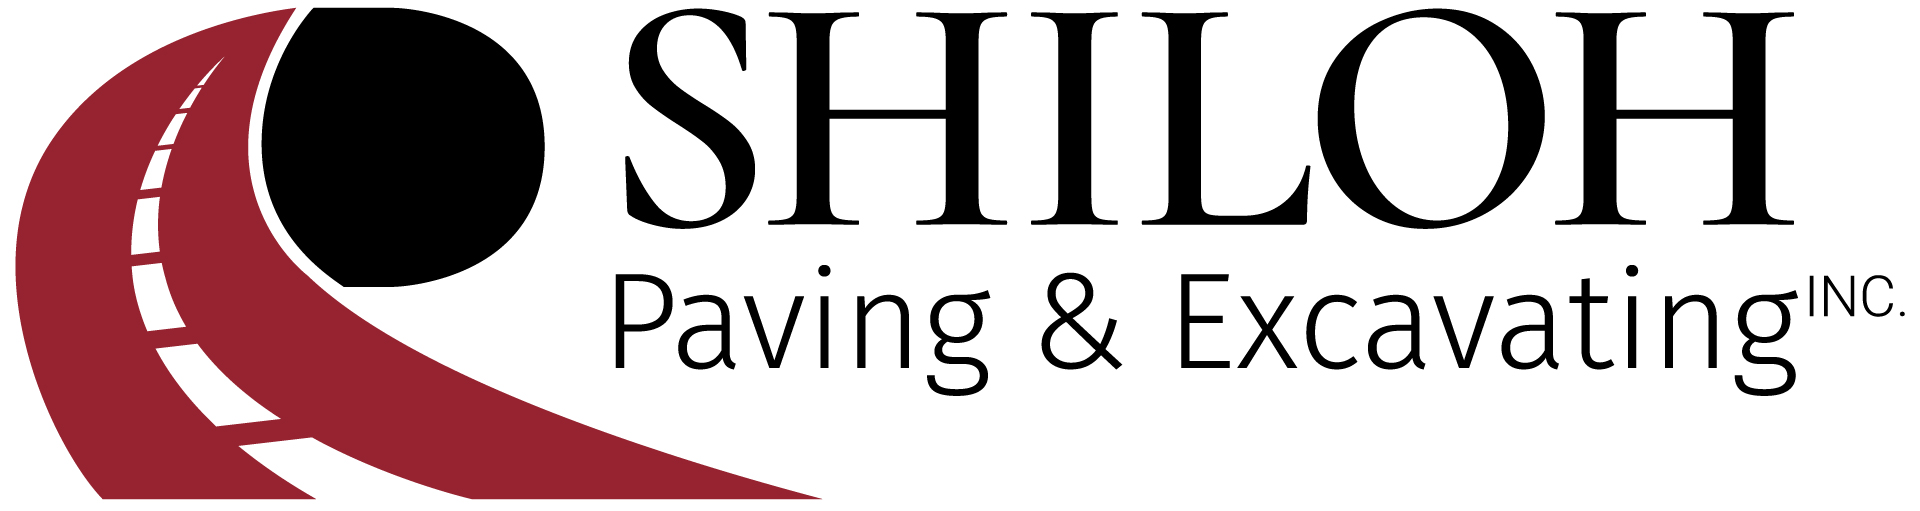 Shiloh Paving & Excavating, Inc.